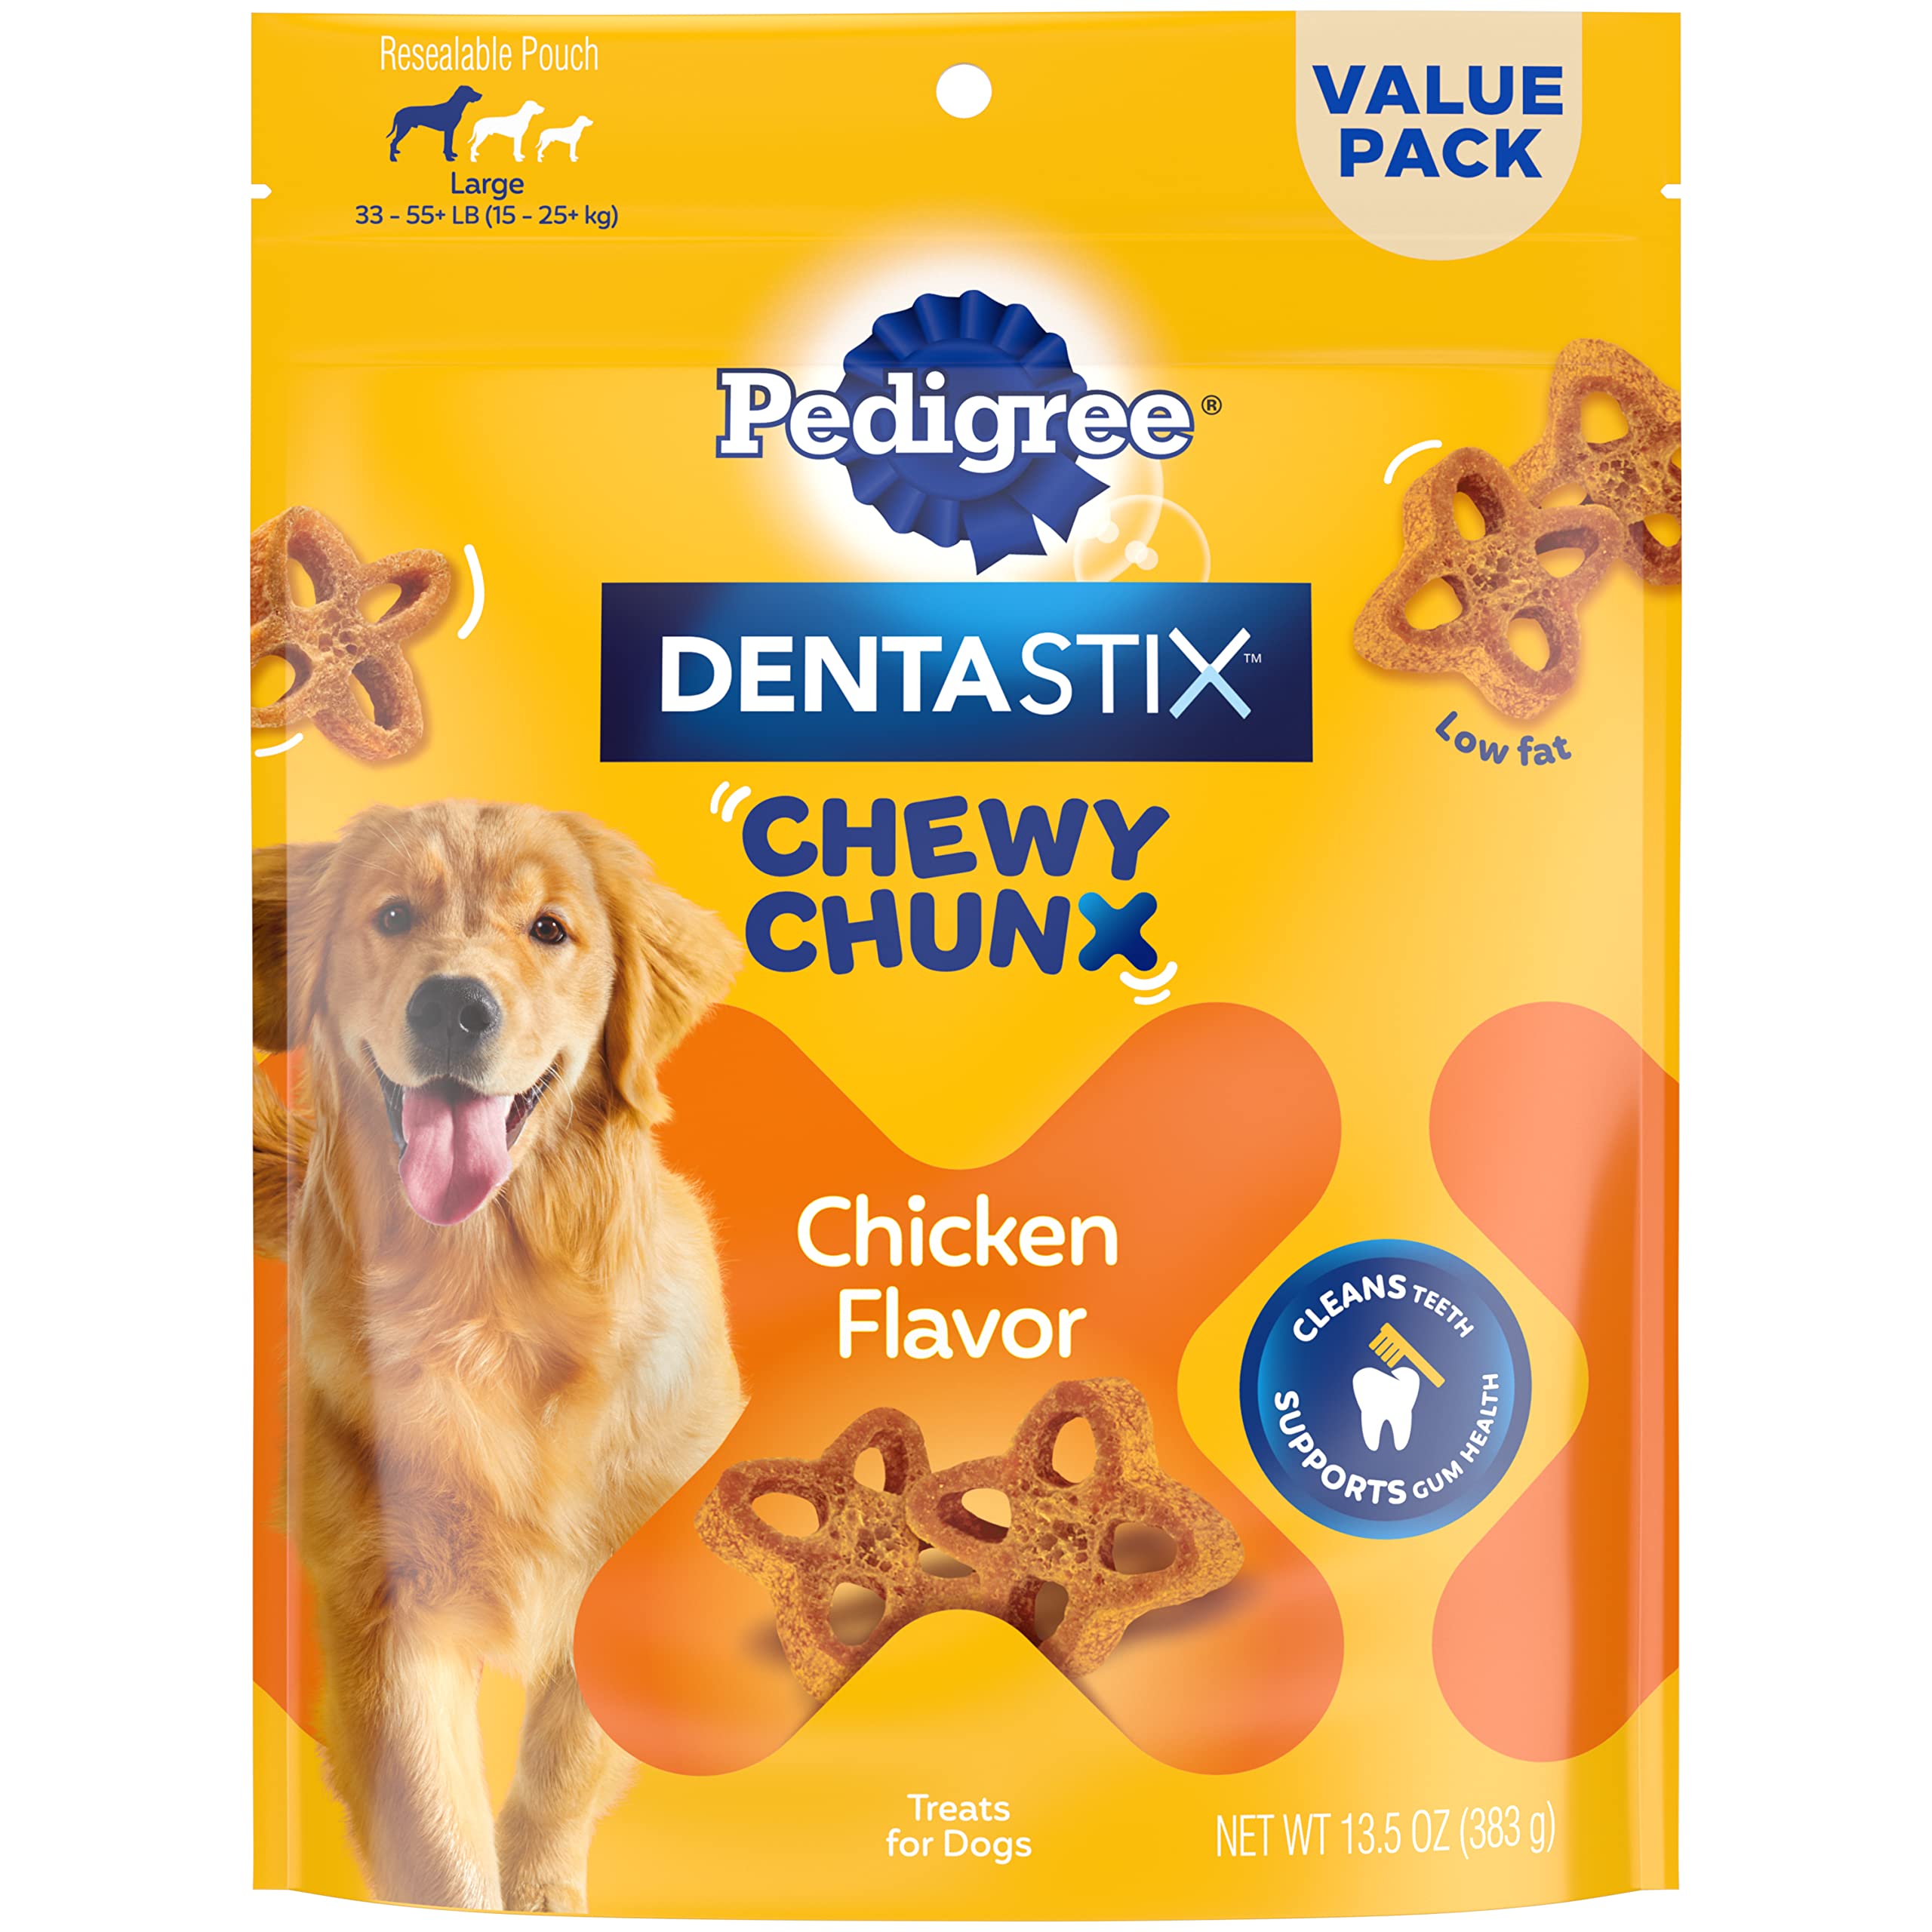 Pedigree DentaStix Chewy Chunx Dental Treats, Large Dog - 13.5 oz